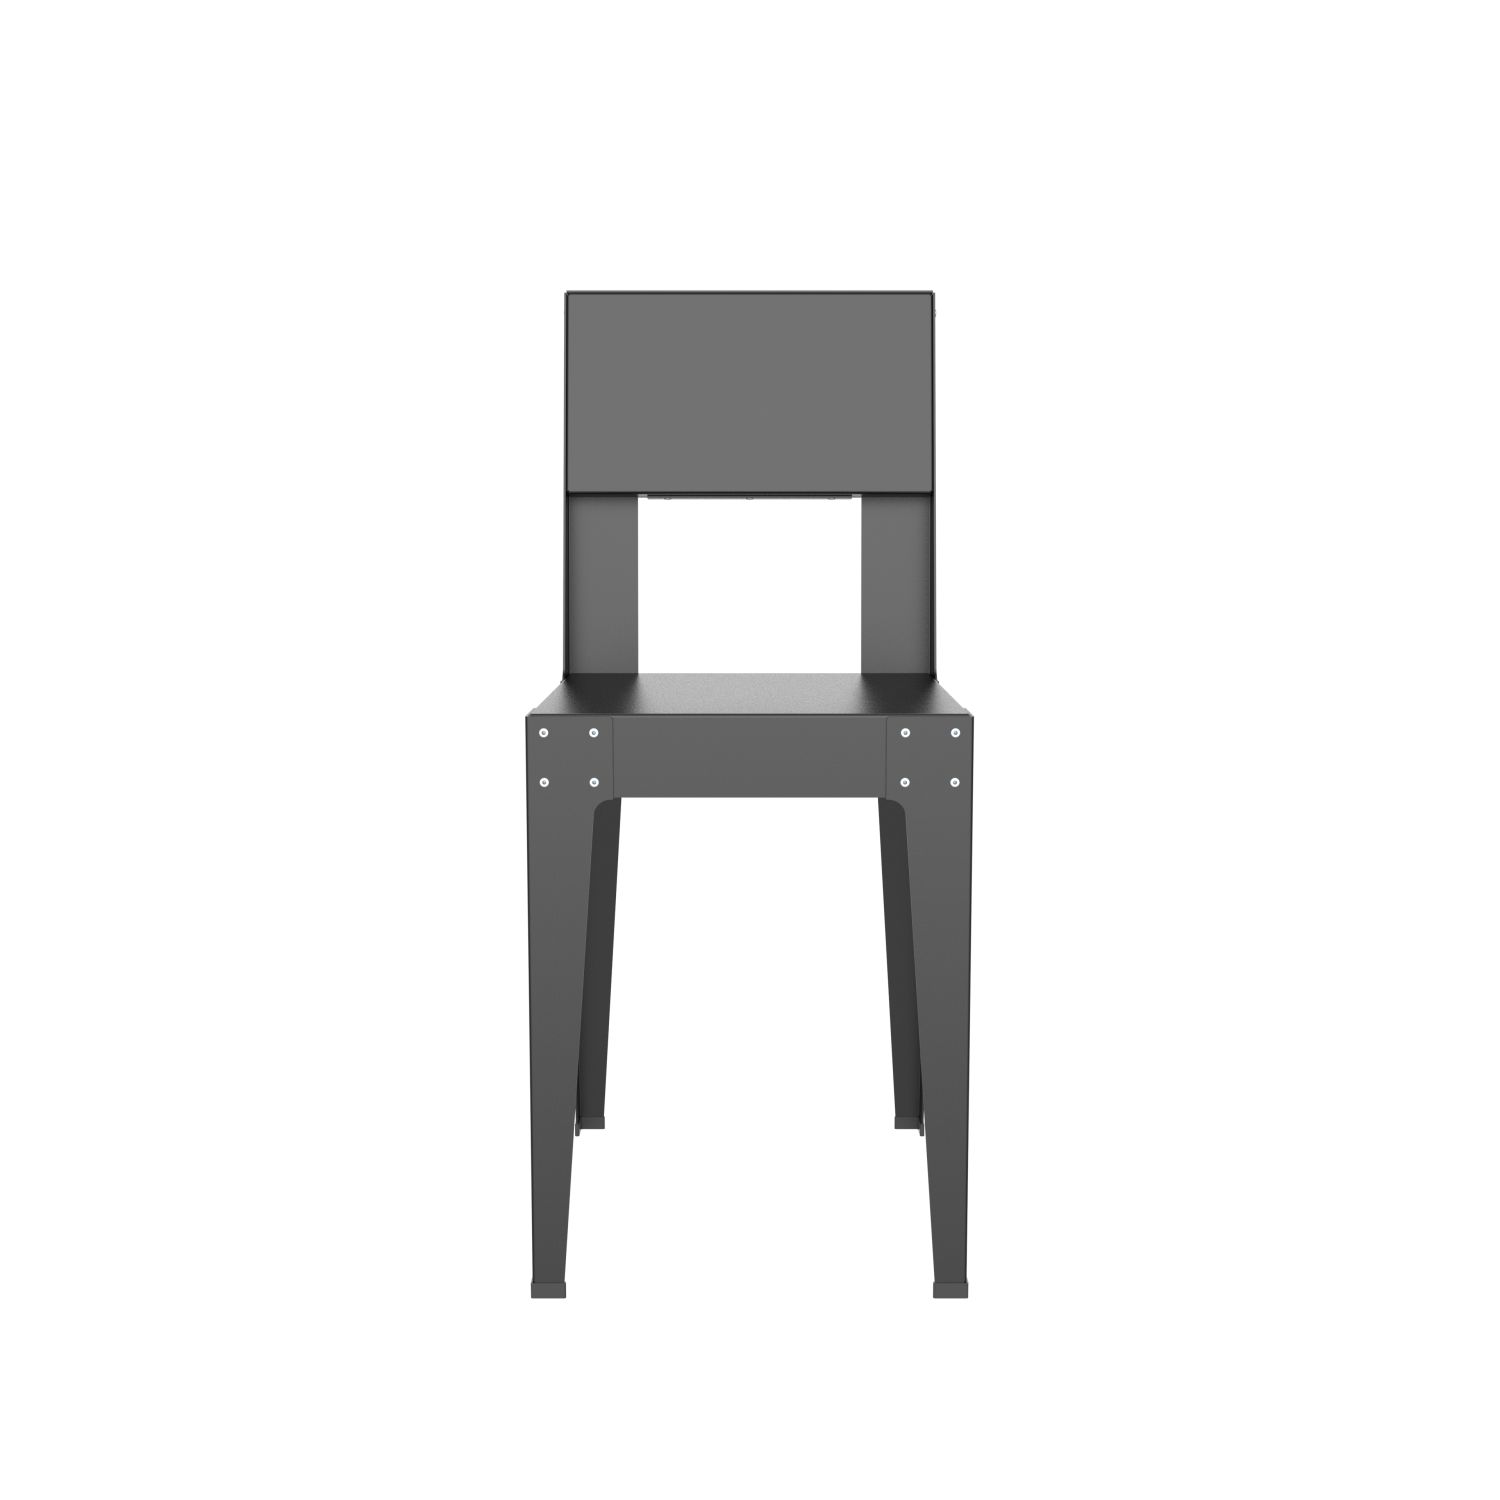 lensvelt piet hein eek aluminium series chair black ral9005 hard leg ends